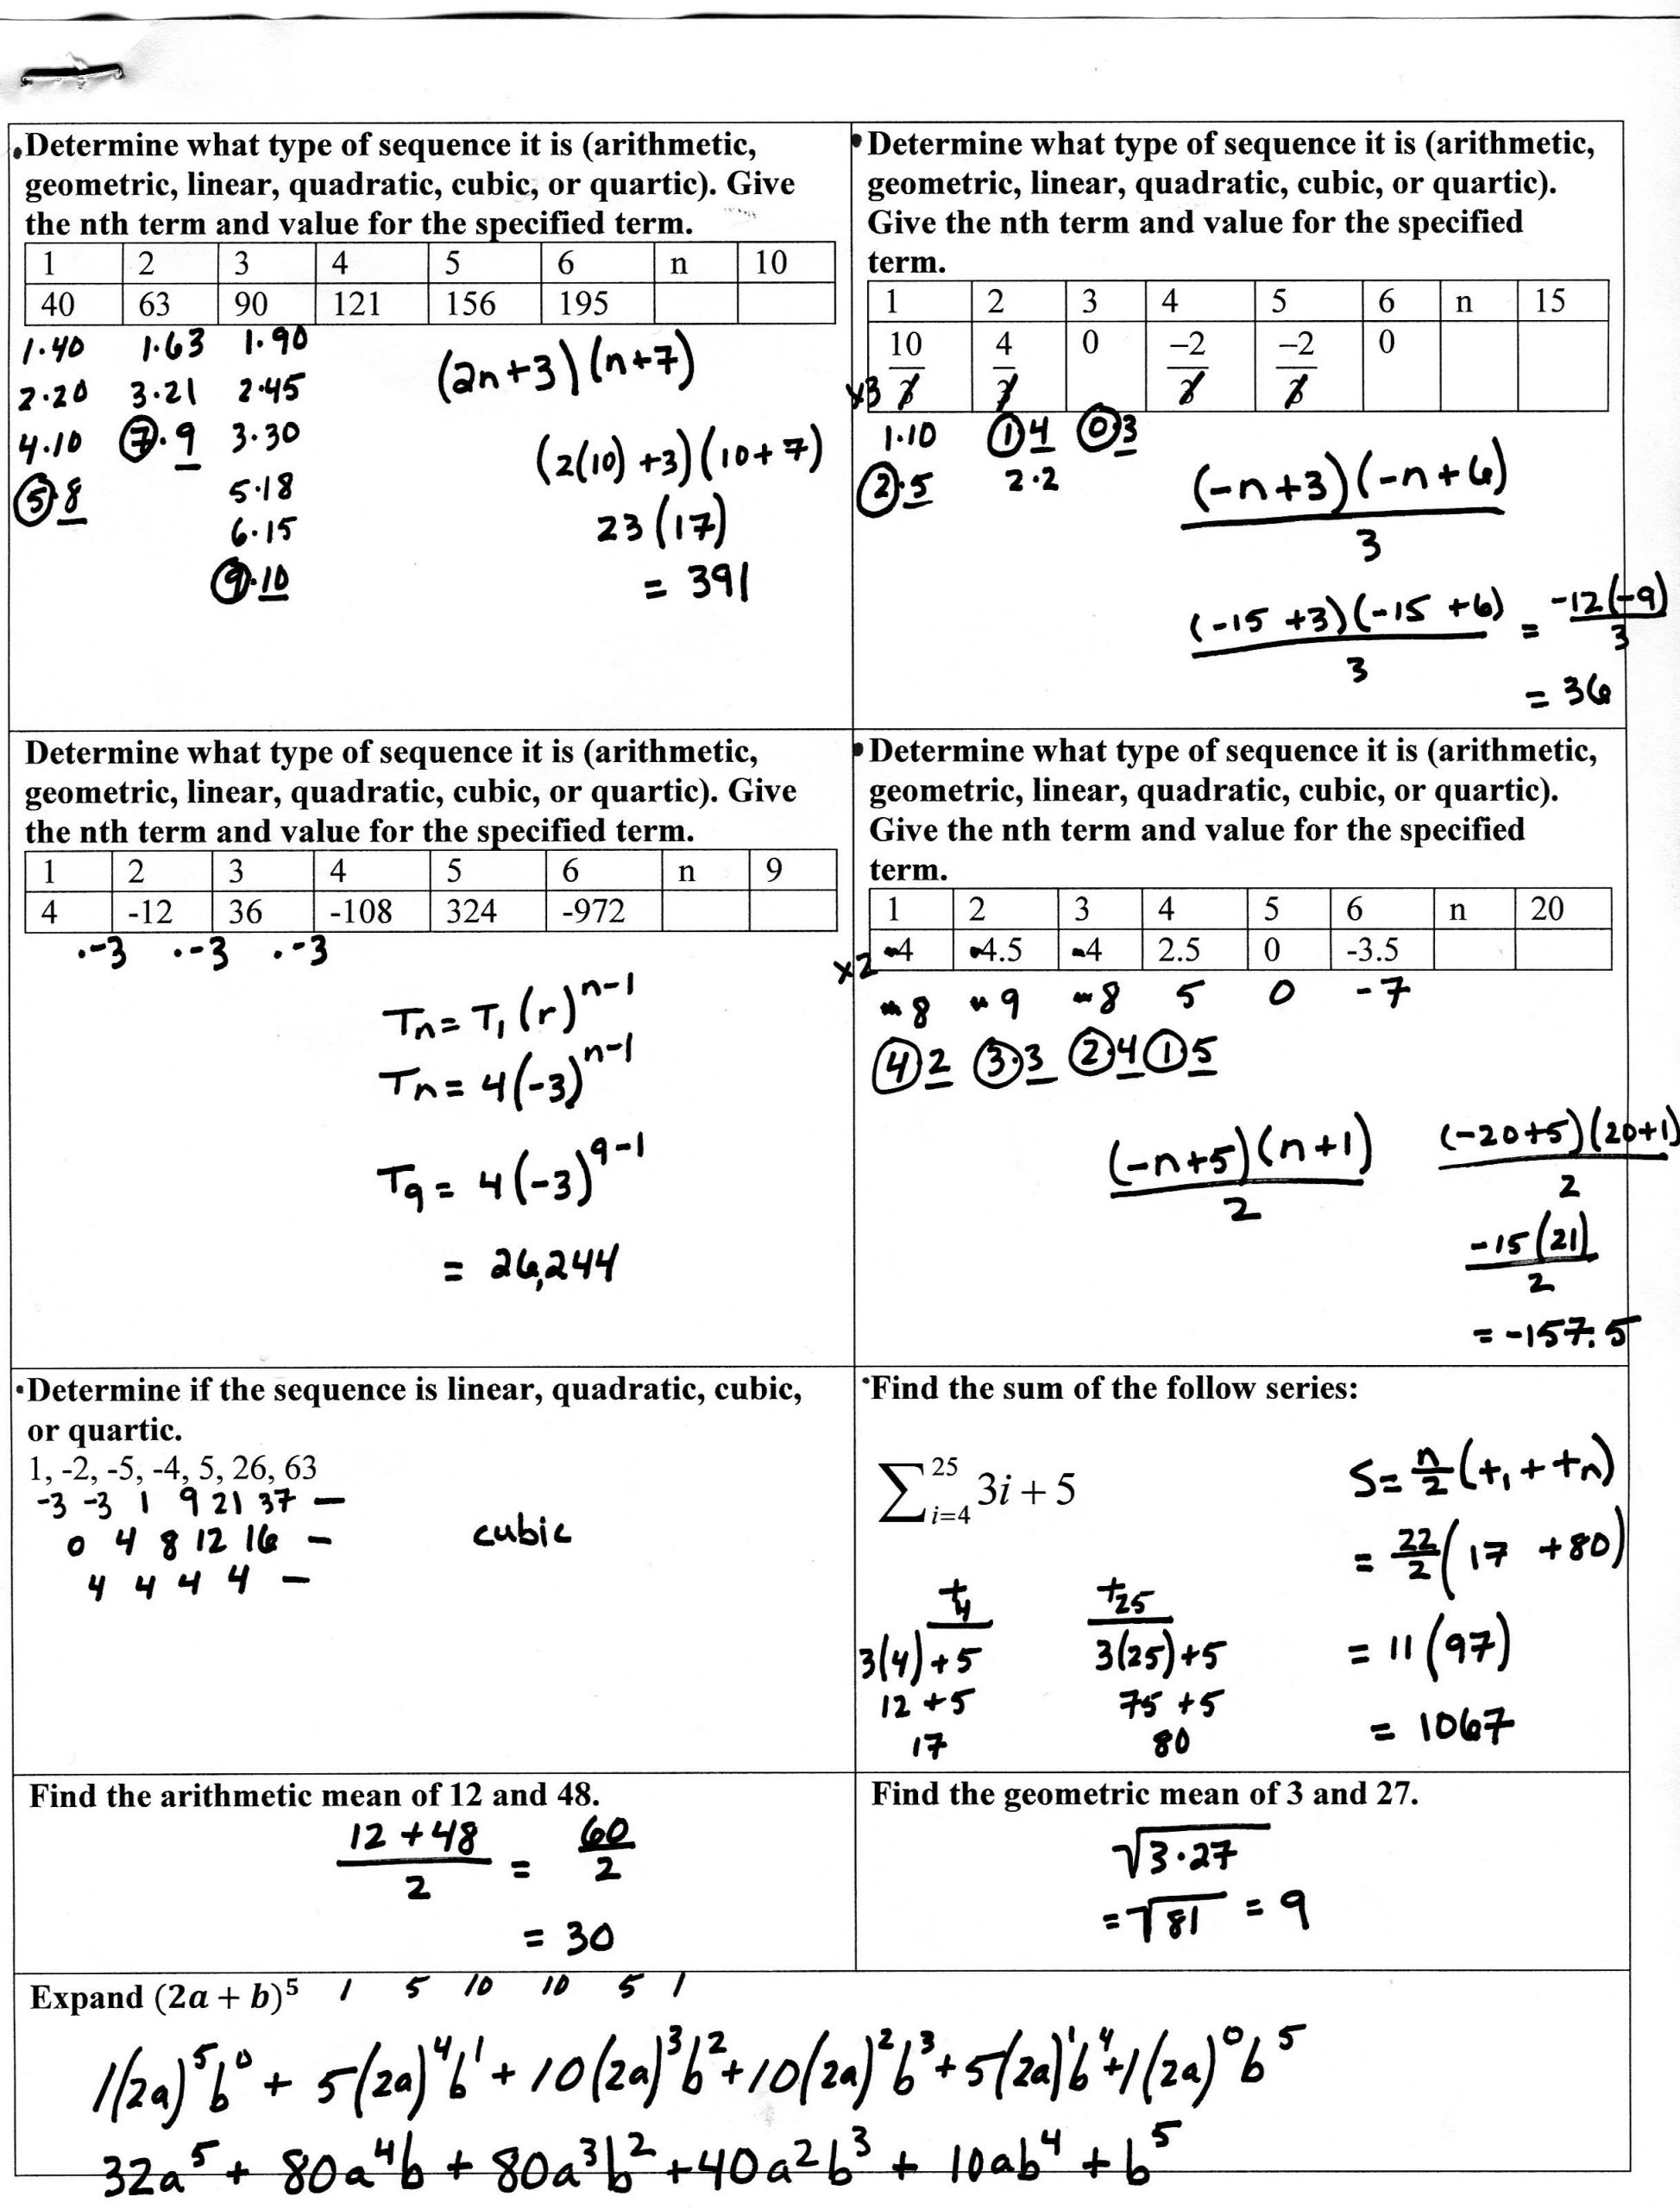 Arithmetic Sequence Worksheet Algebra 1 31 Arithmetic Sequences and Series Worksheet Answers